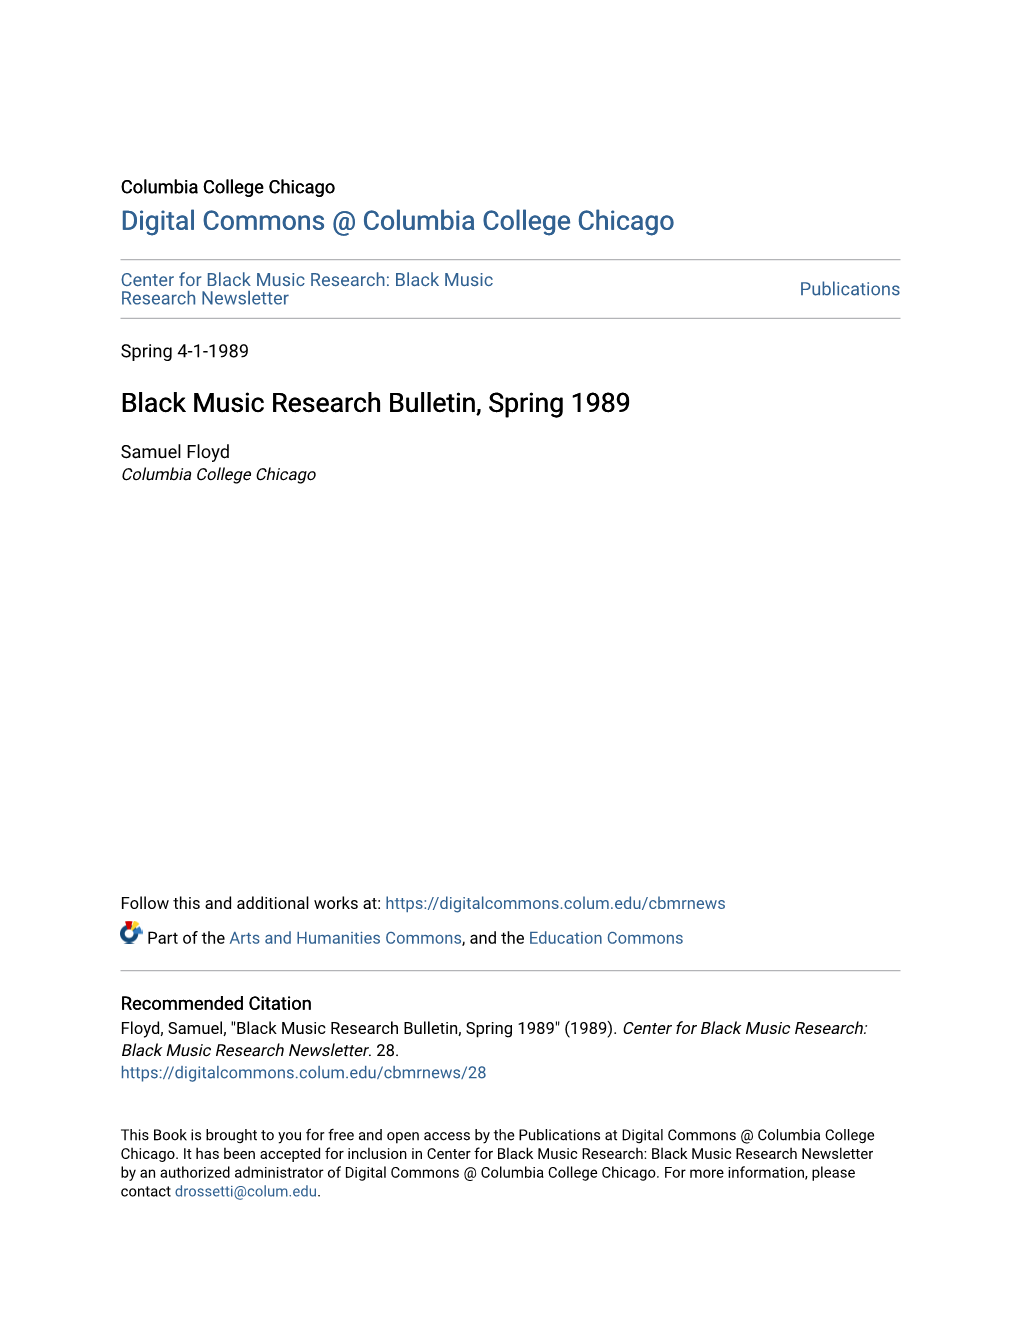 Black Music Research Bulletin, Spring 1989